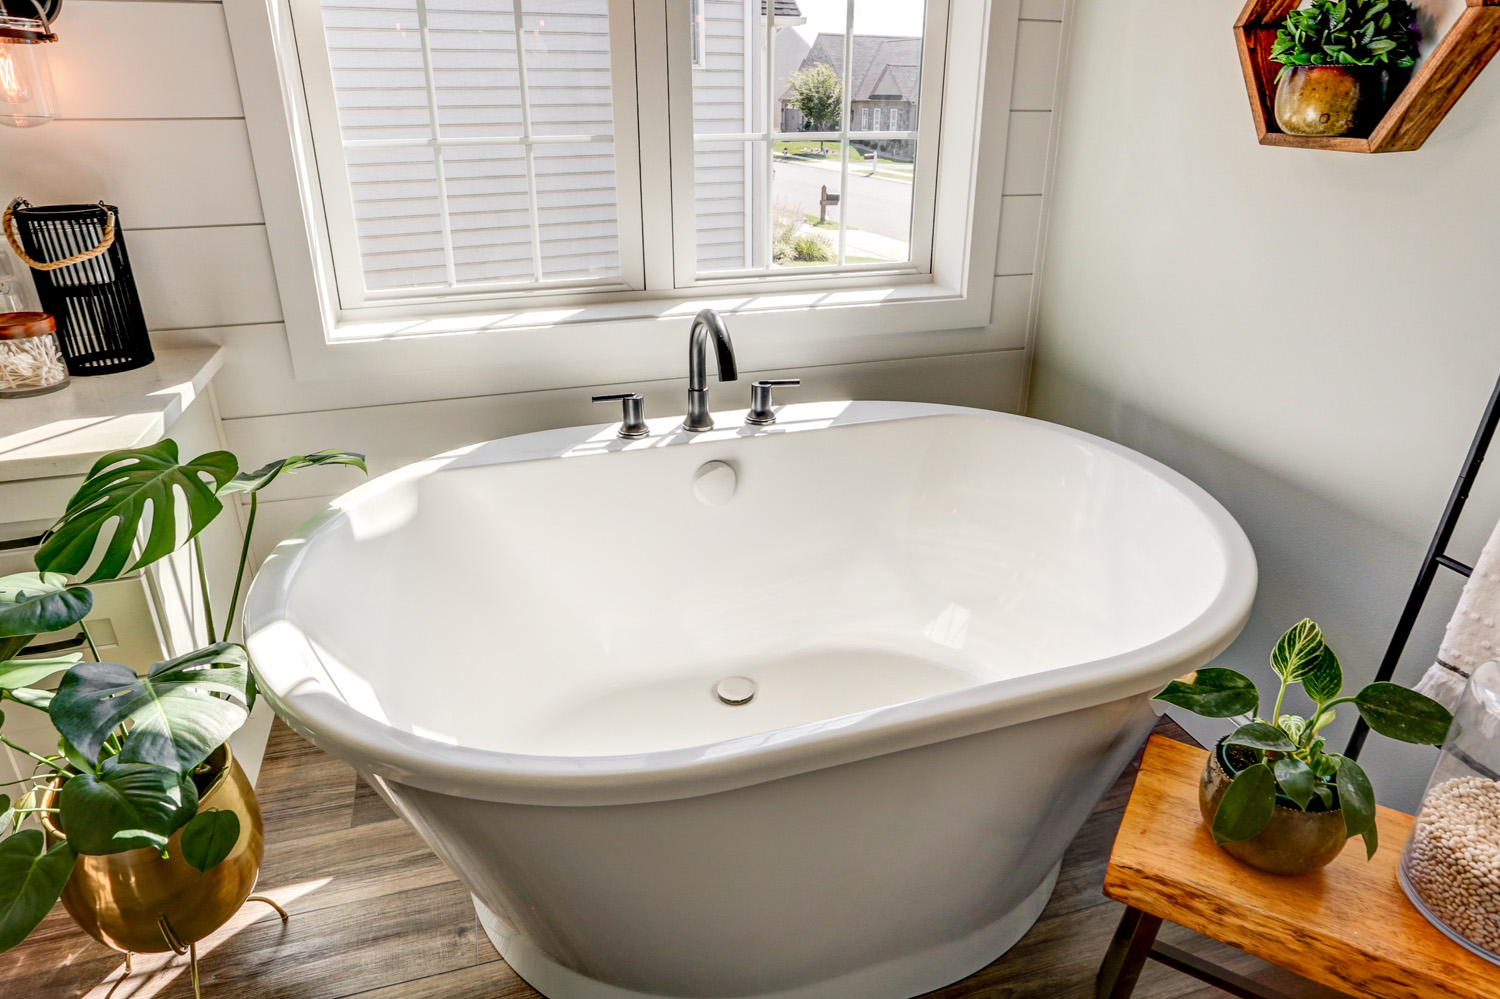 Luxury freestanding tub in Lancaster PA bathroom remodel